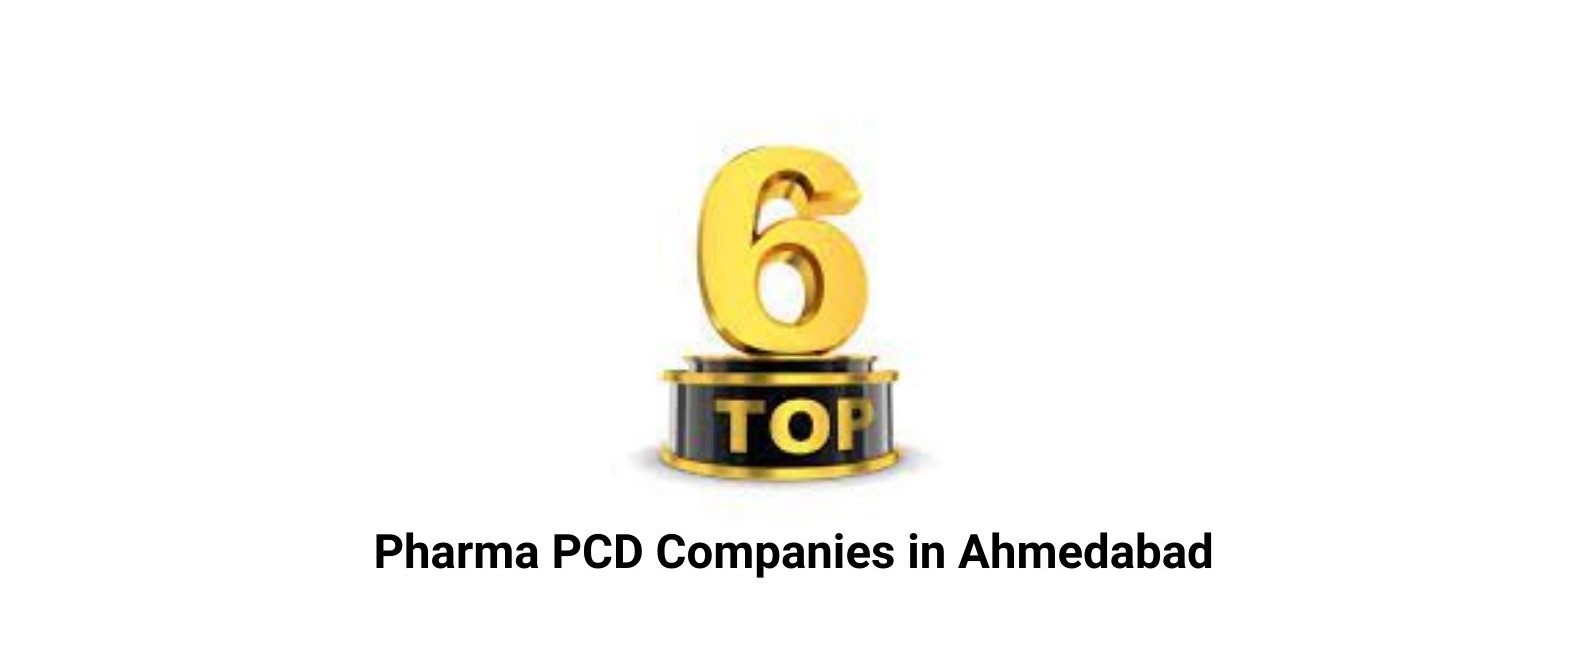 Top Pharma PCD Companies in Ahmedabad